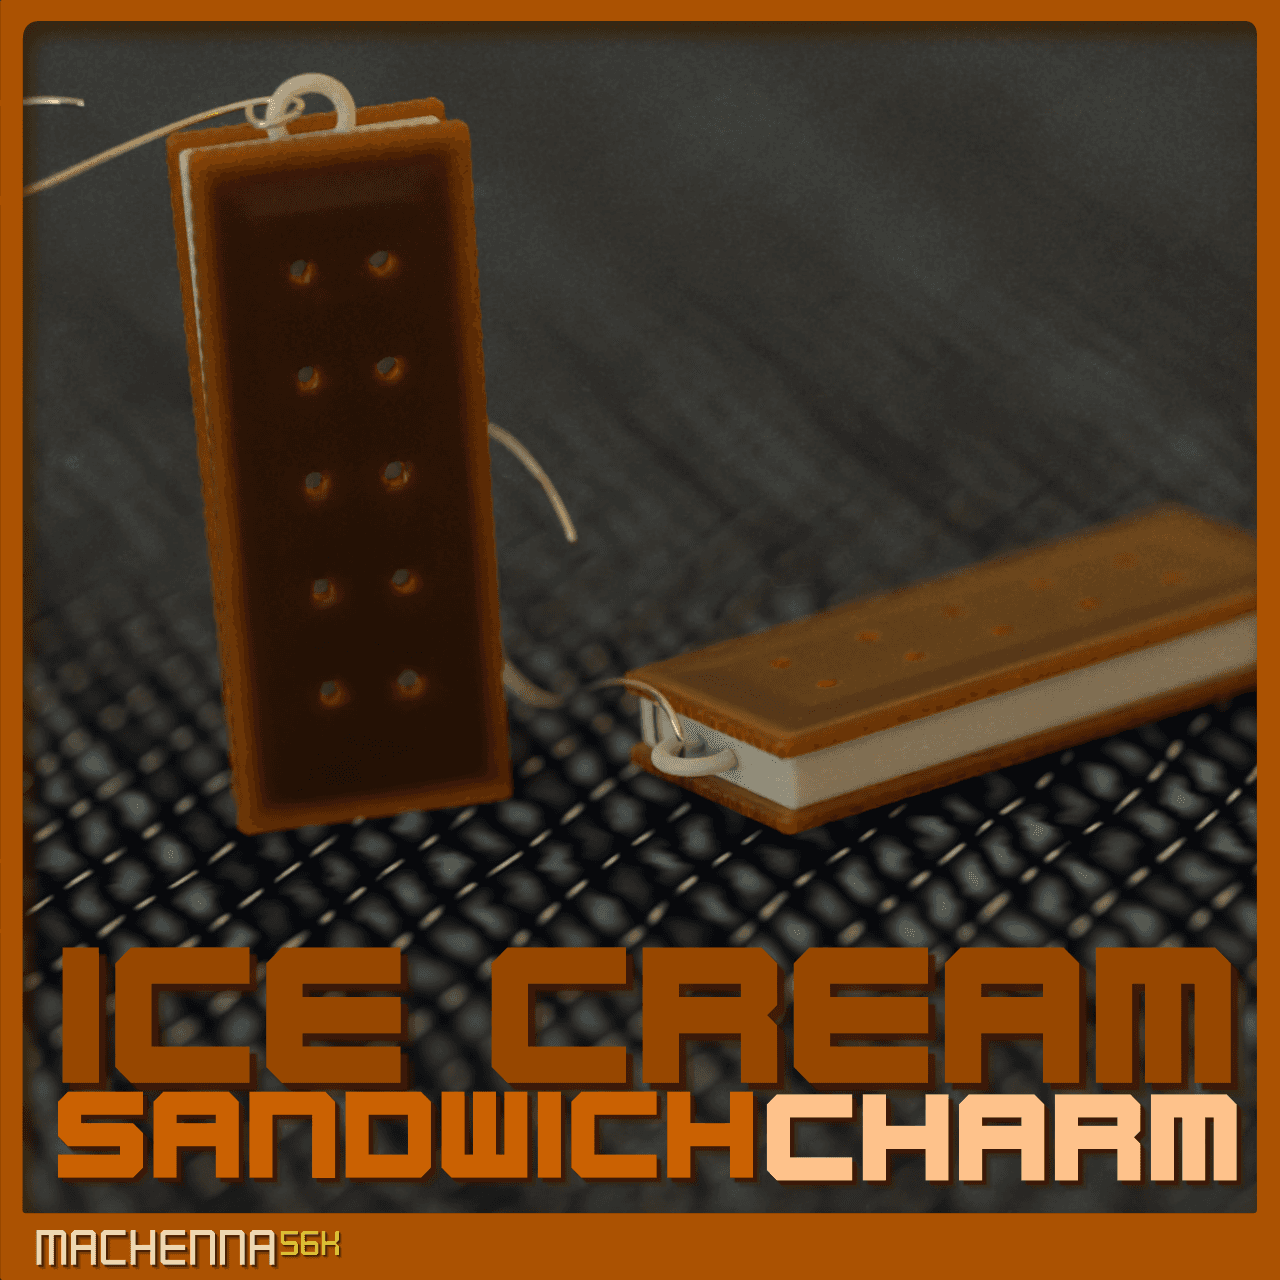 Ice Cream Sandwich Charm 3d model